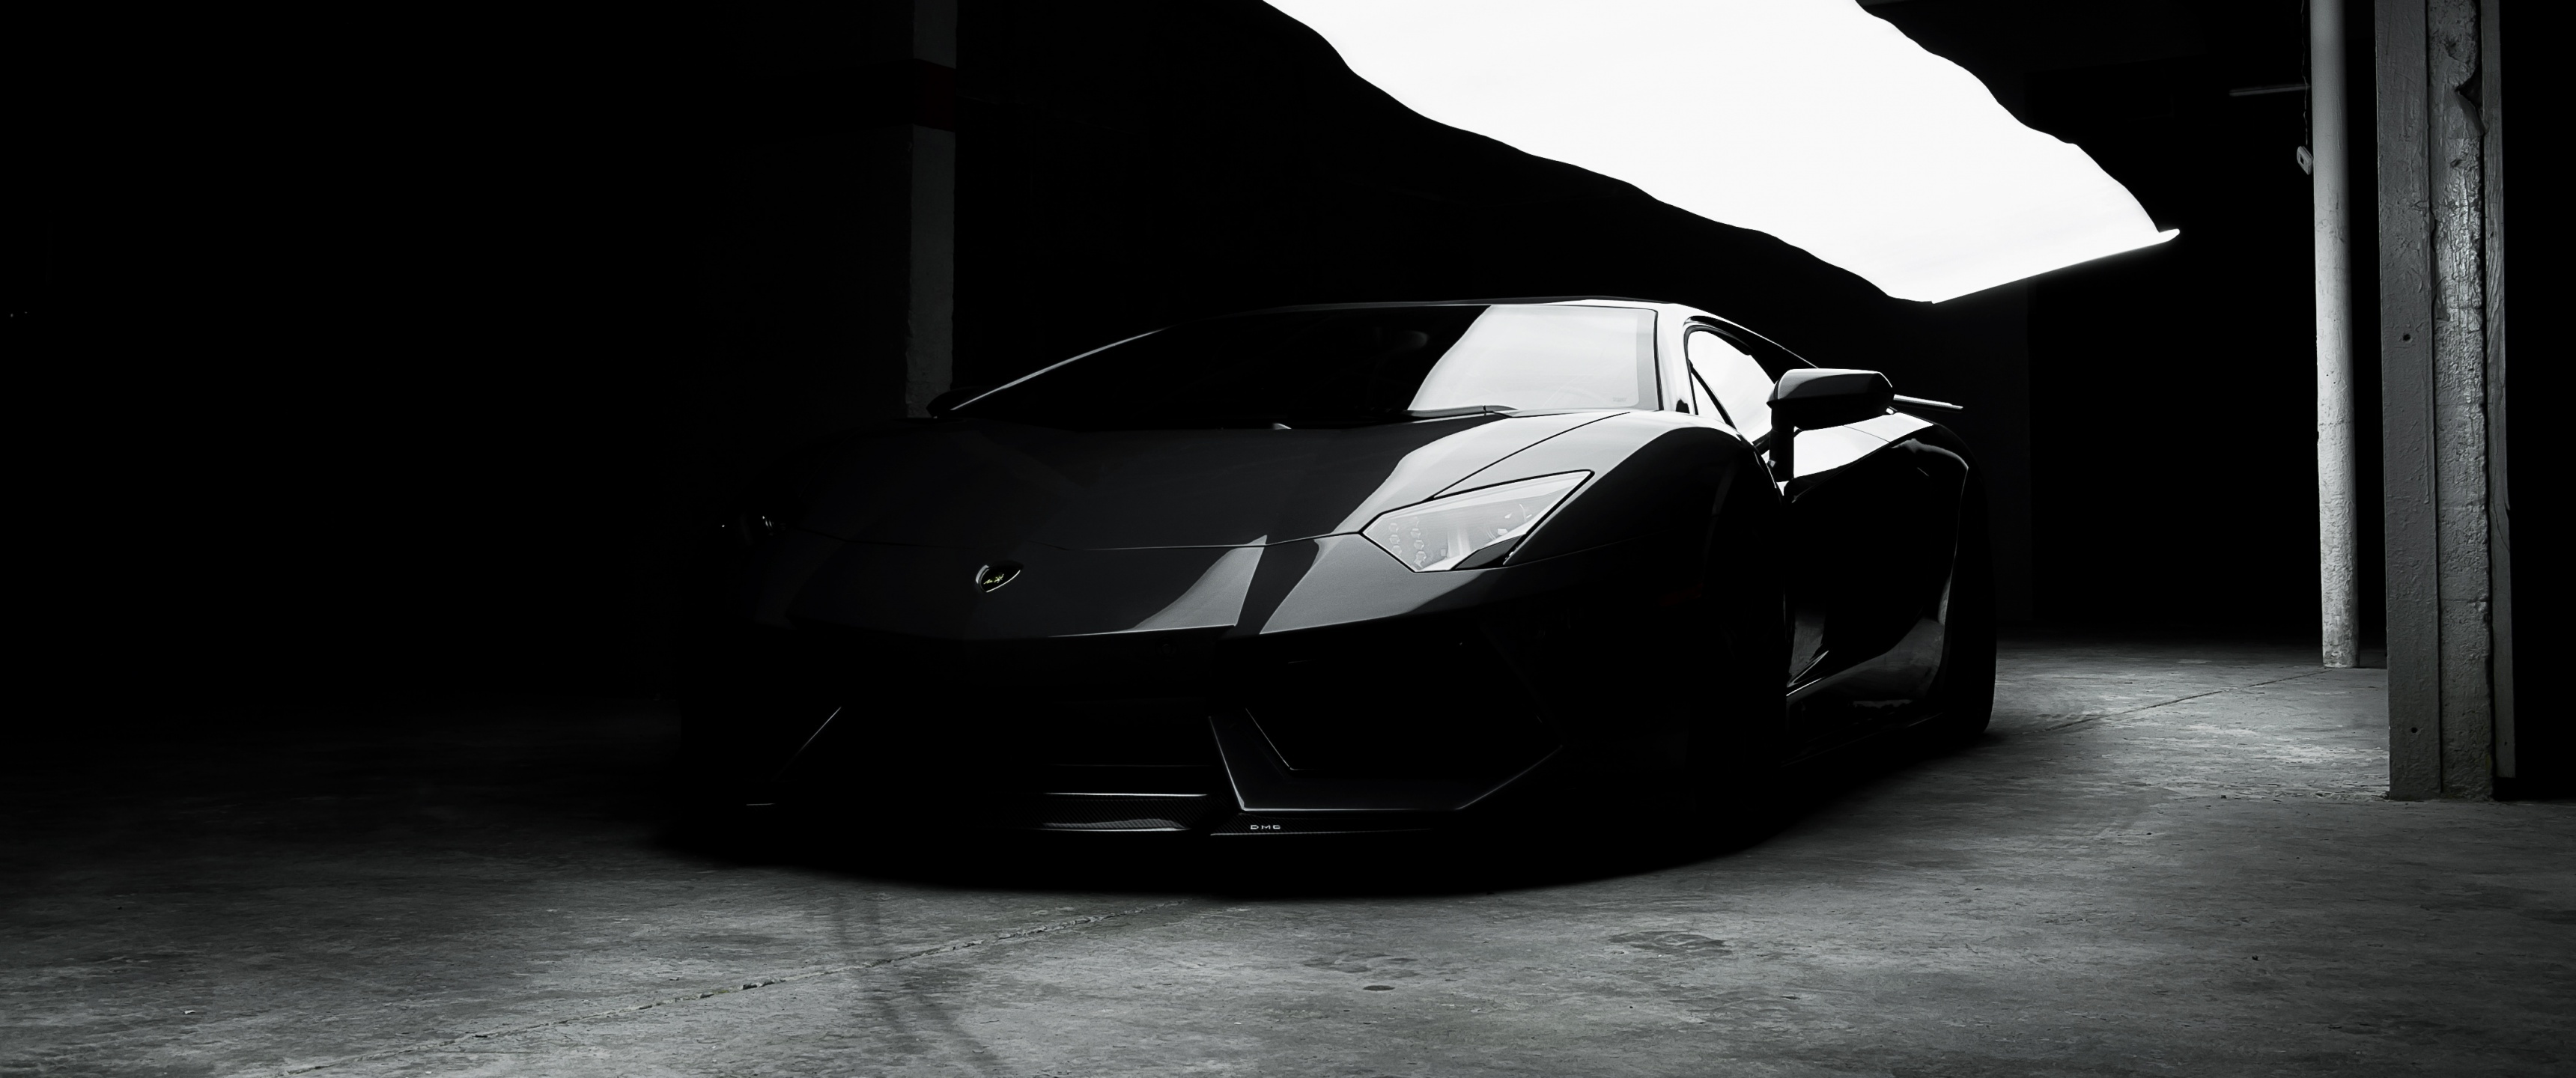 Aventador CGI, Lamborghini Aventador Wallpaper, 3440x1440 Dual Screen Desktop